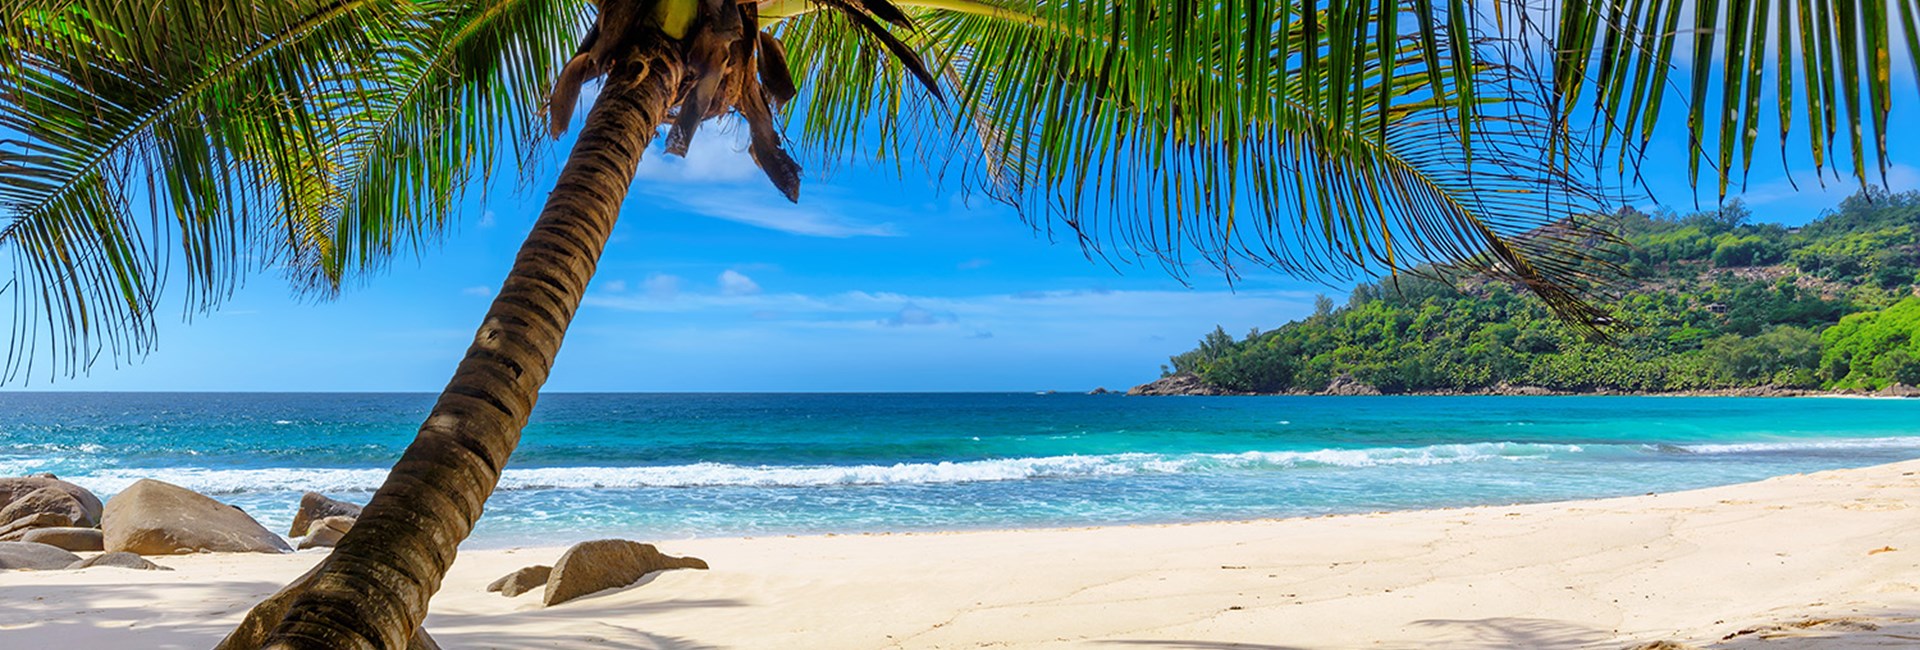 Large palm tree on tropical beach